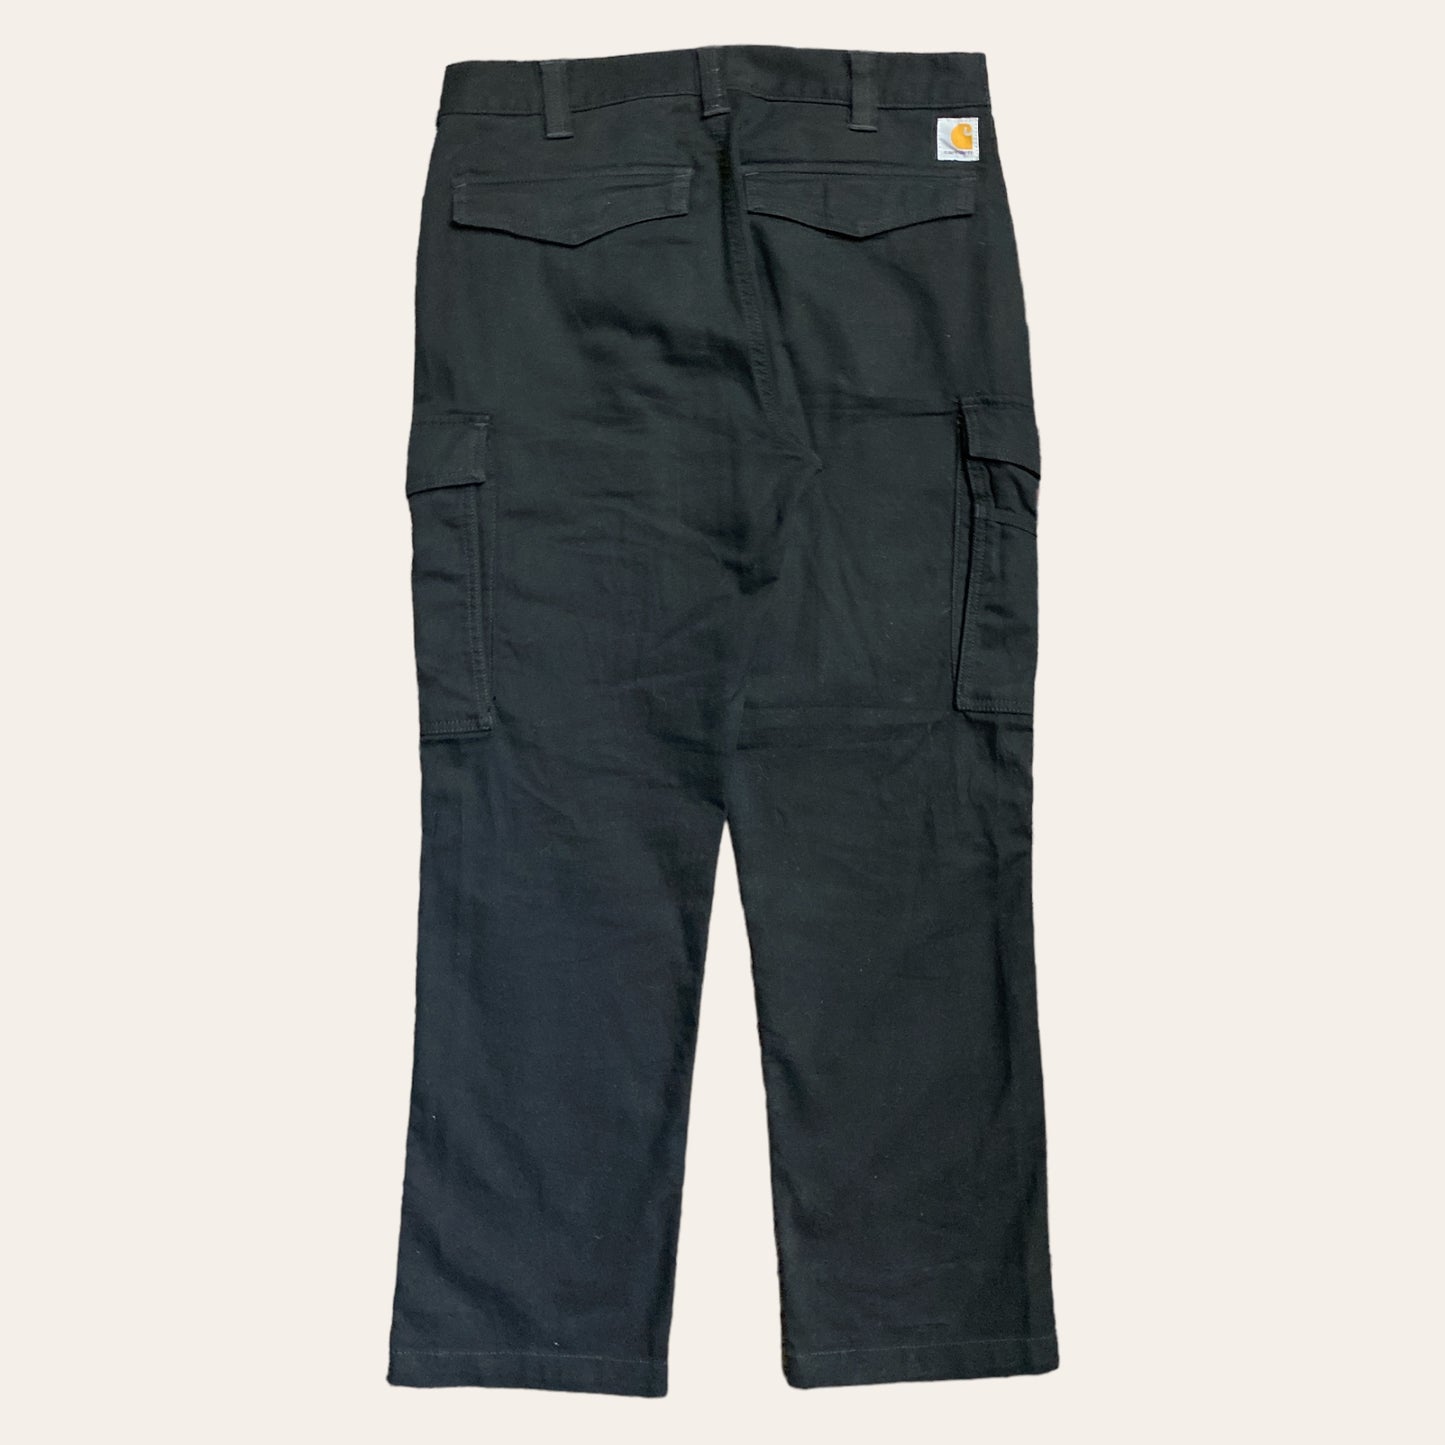 Carhartt Cargo Pants Black Size 33x30